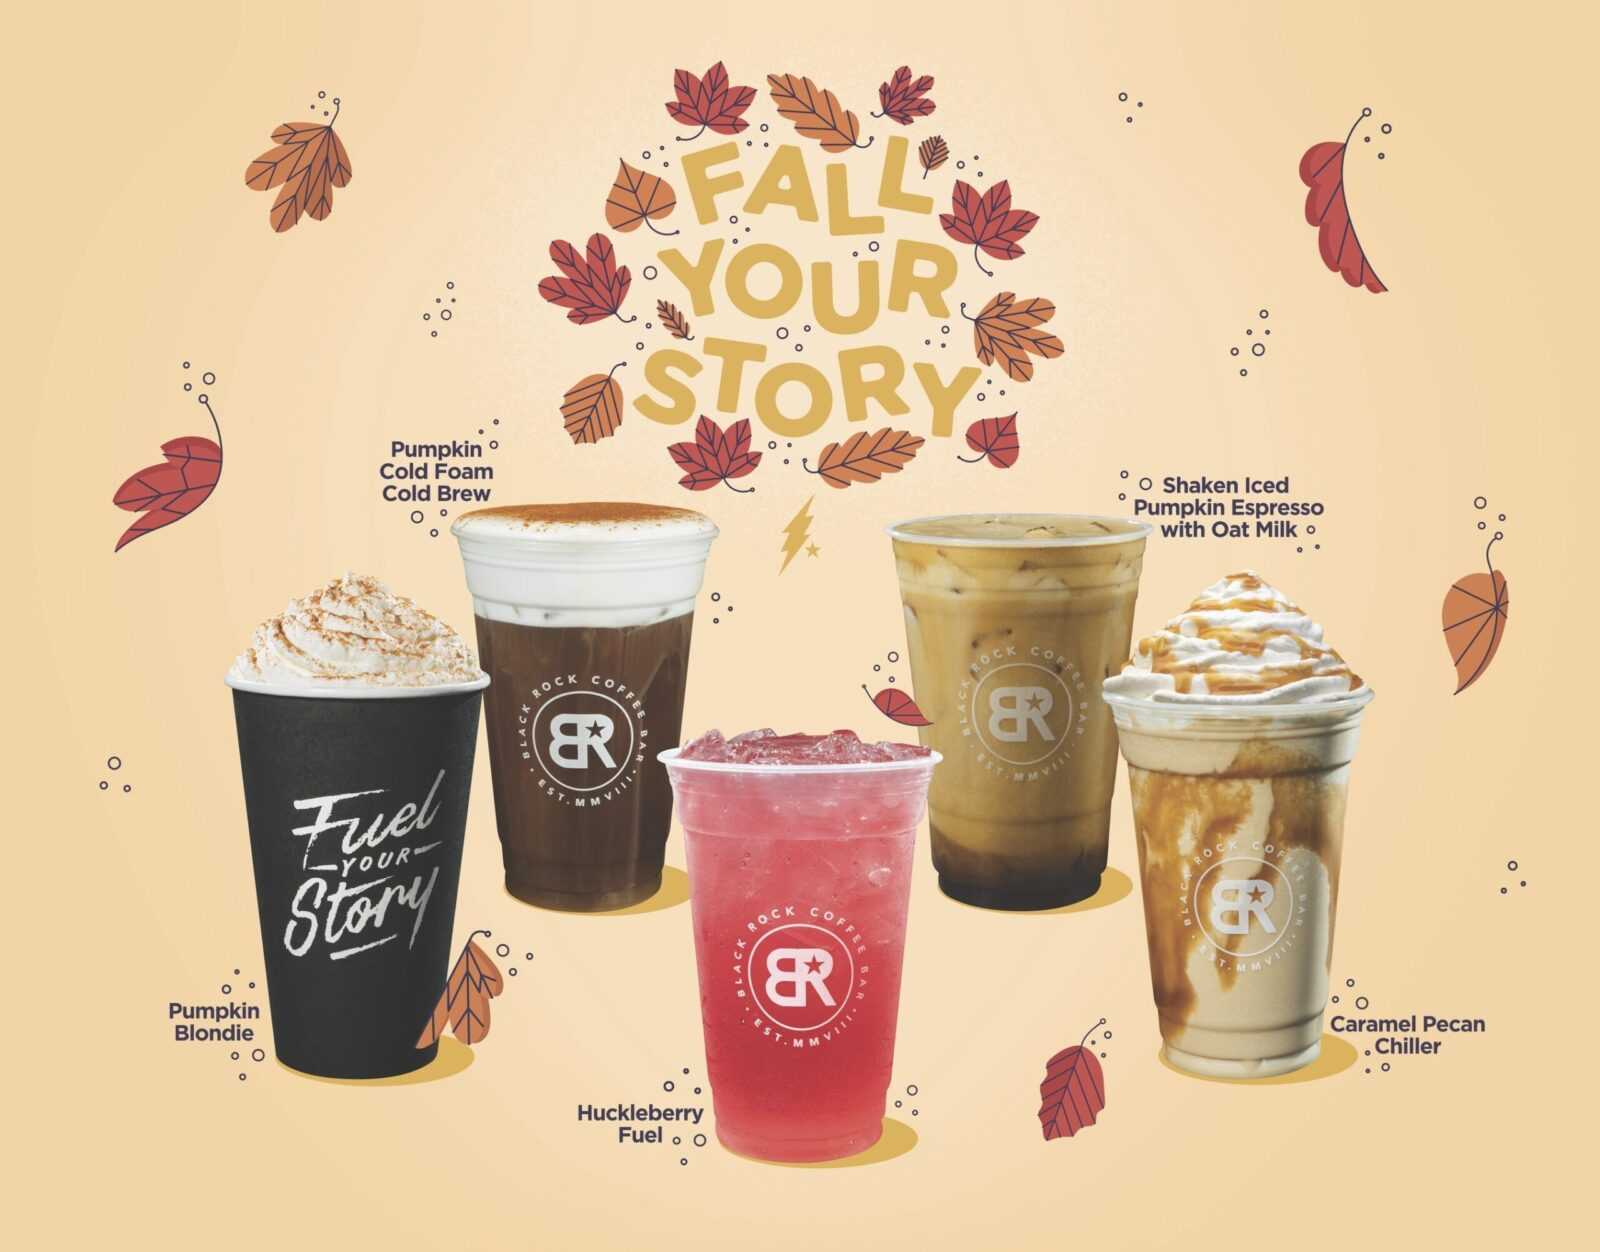 Black Rock Coffee Bar introduces a pumpkinheavy fall menu of drinks